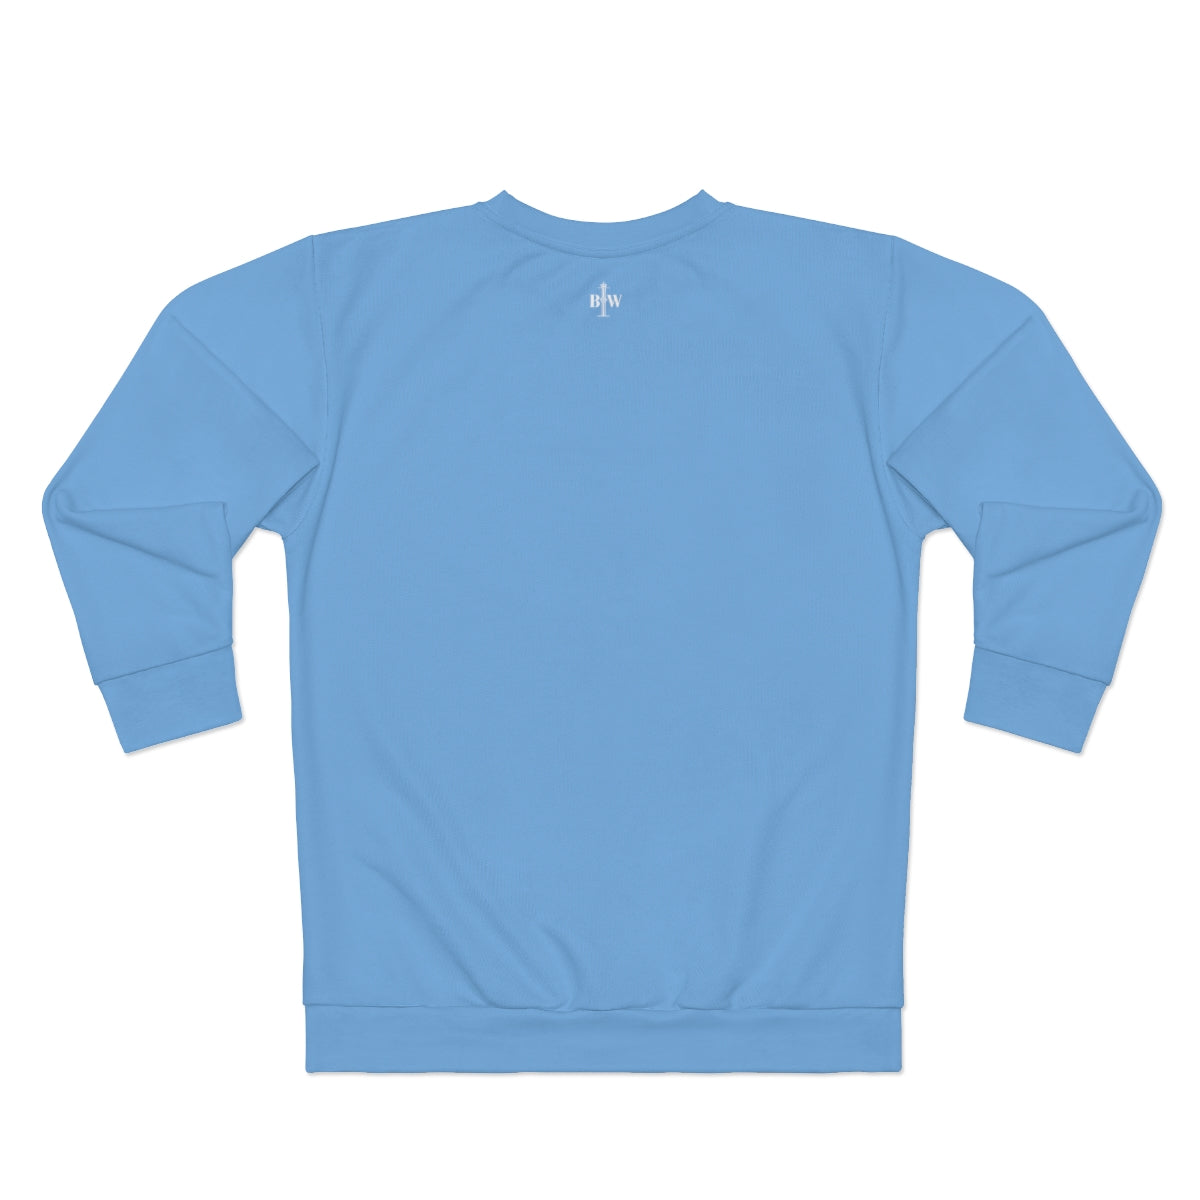 BIW "BLUE ICE" Sweatshirt